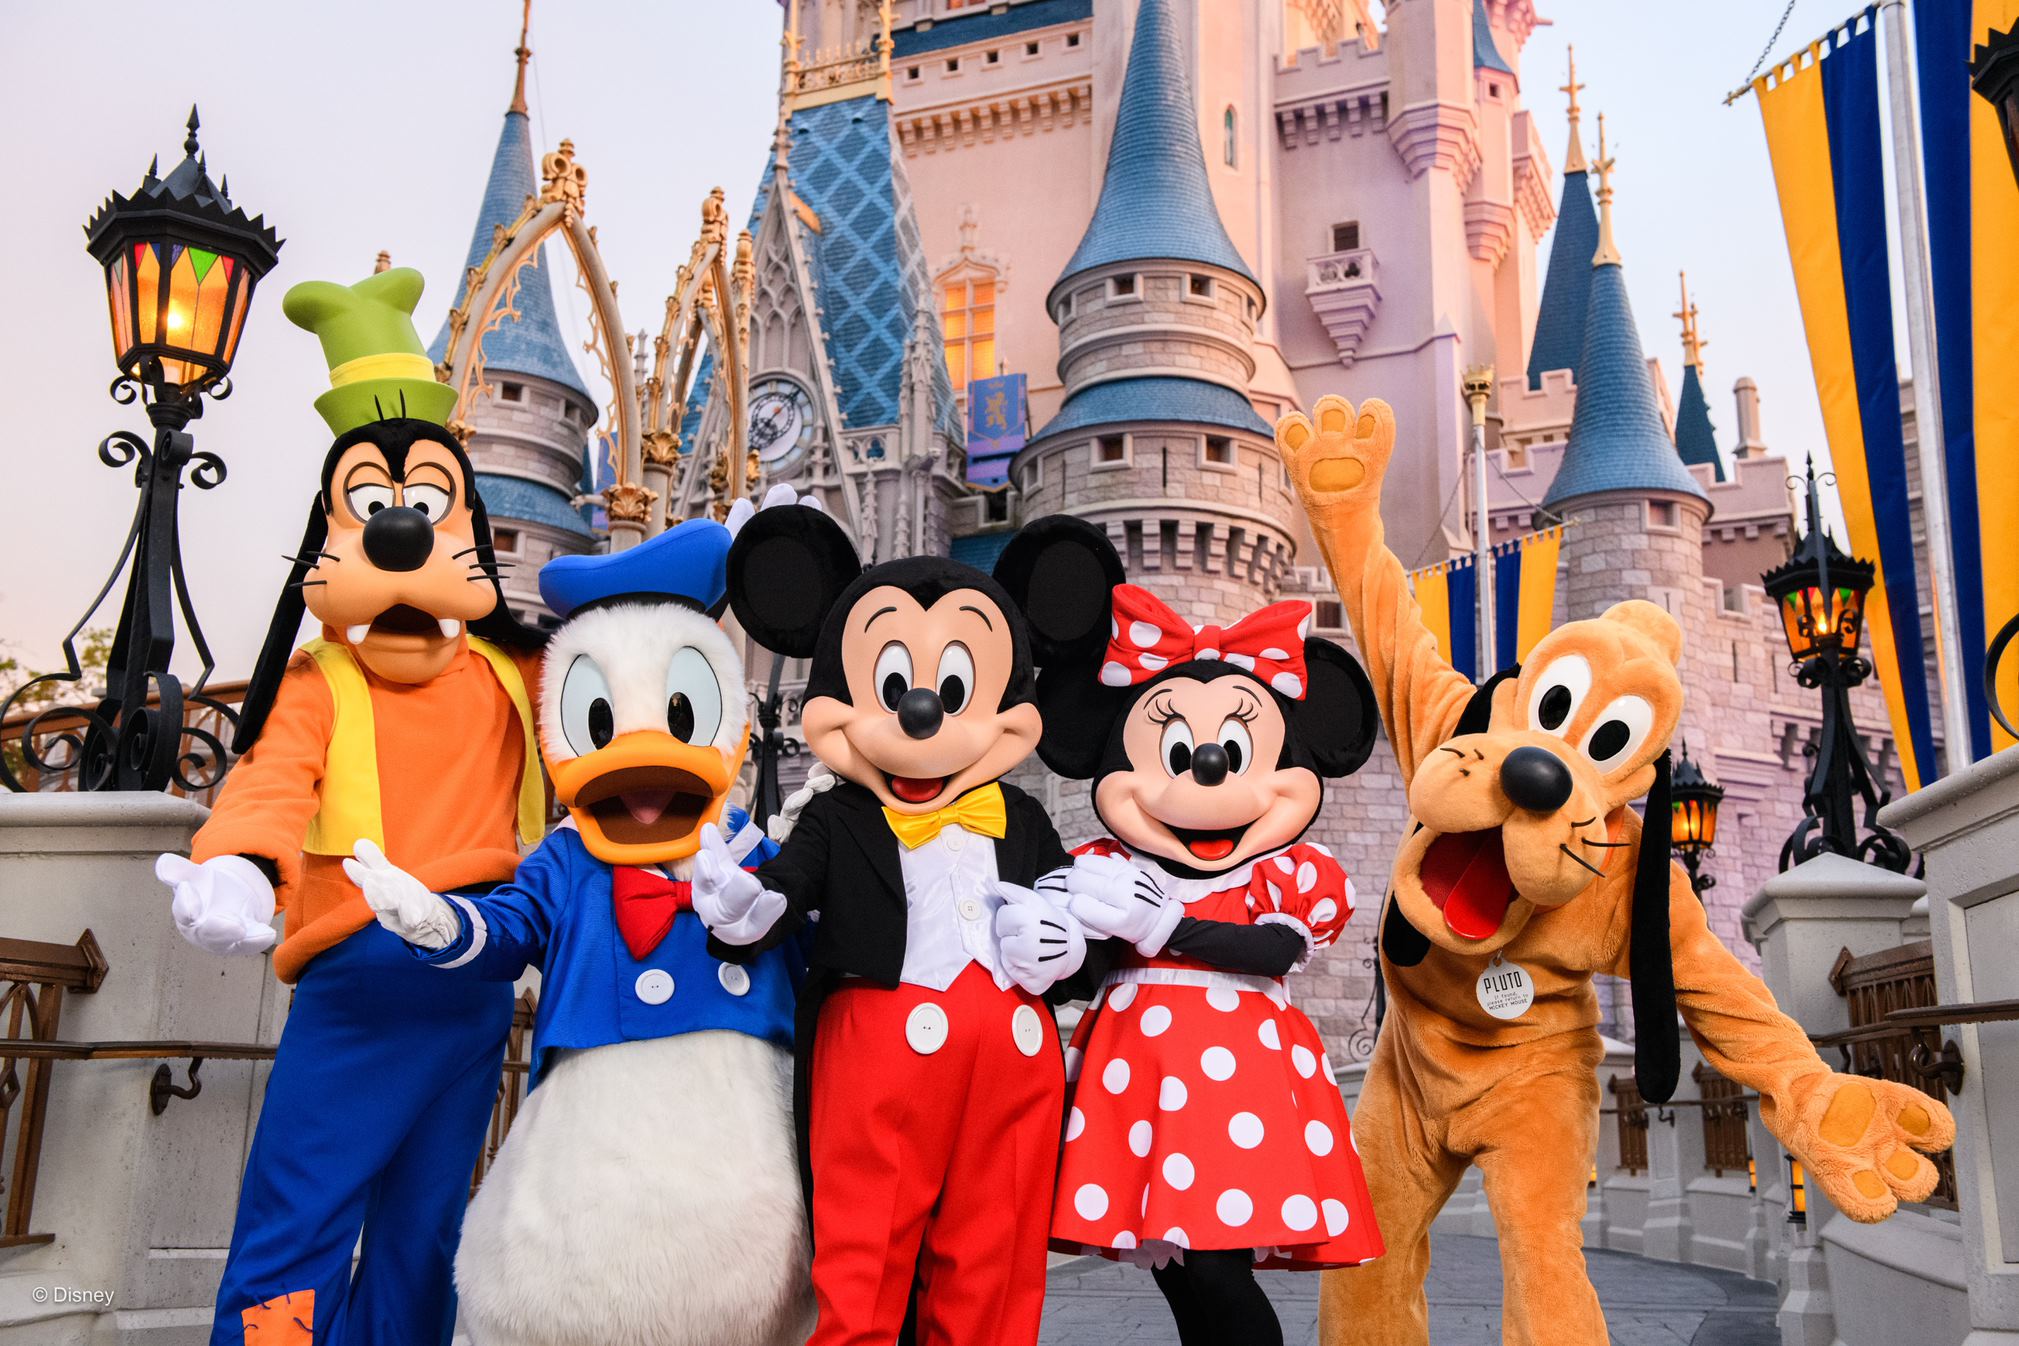 Goofy, donald, mickey, minnie, pluto in front of magic kingdom disney world castle